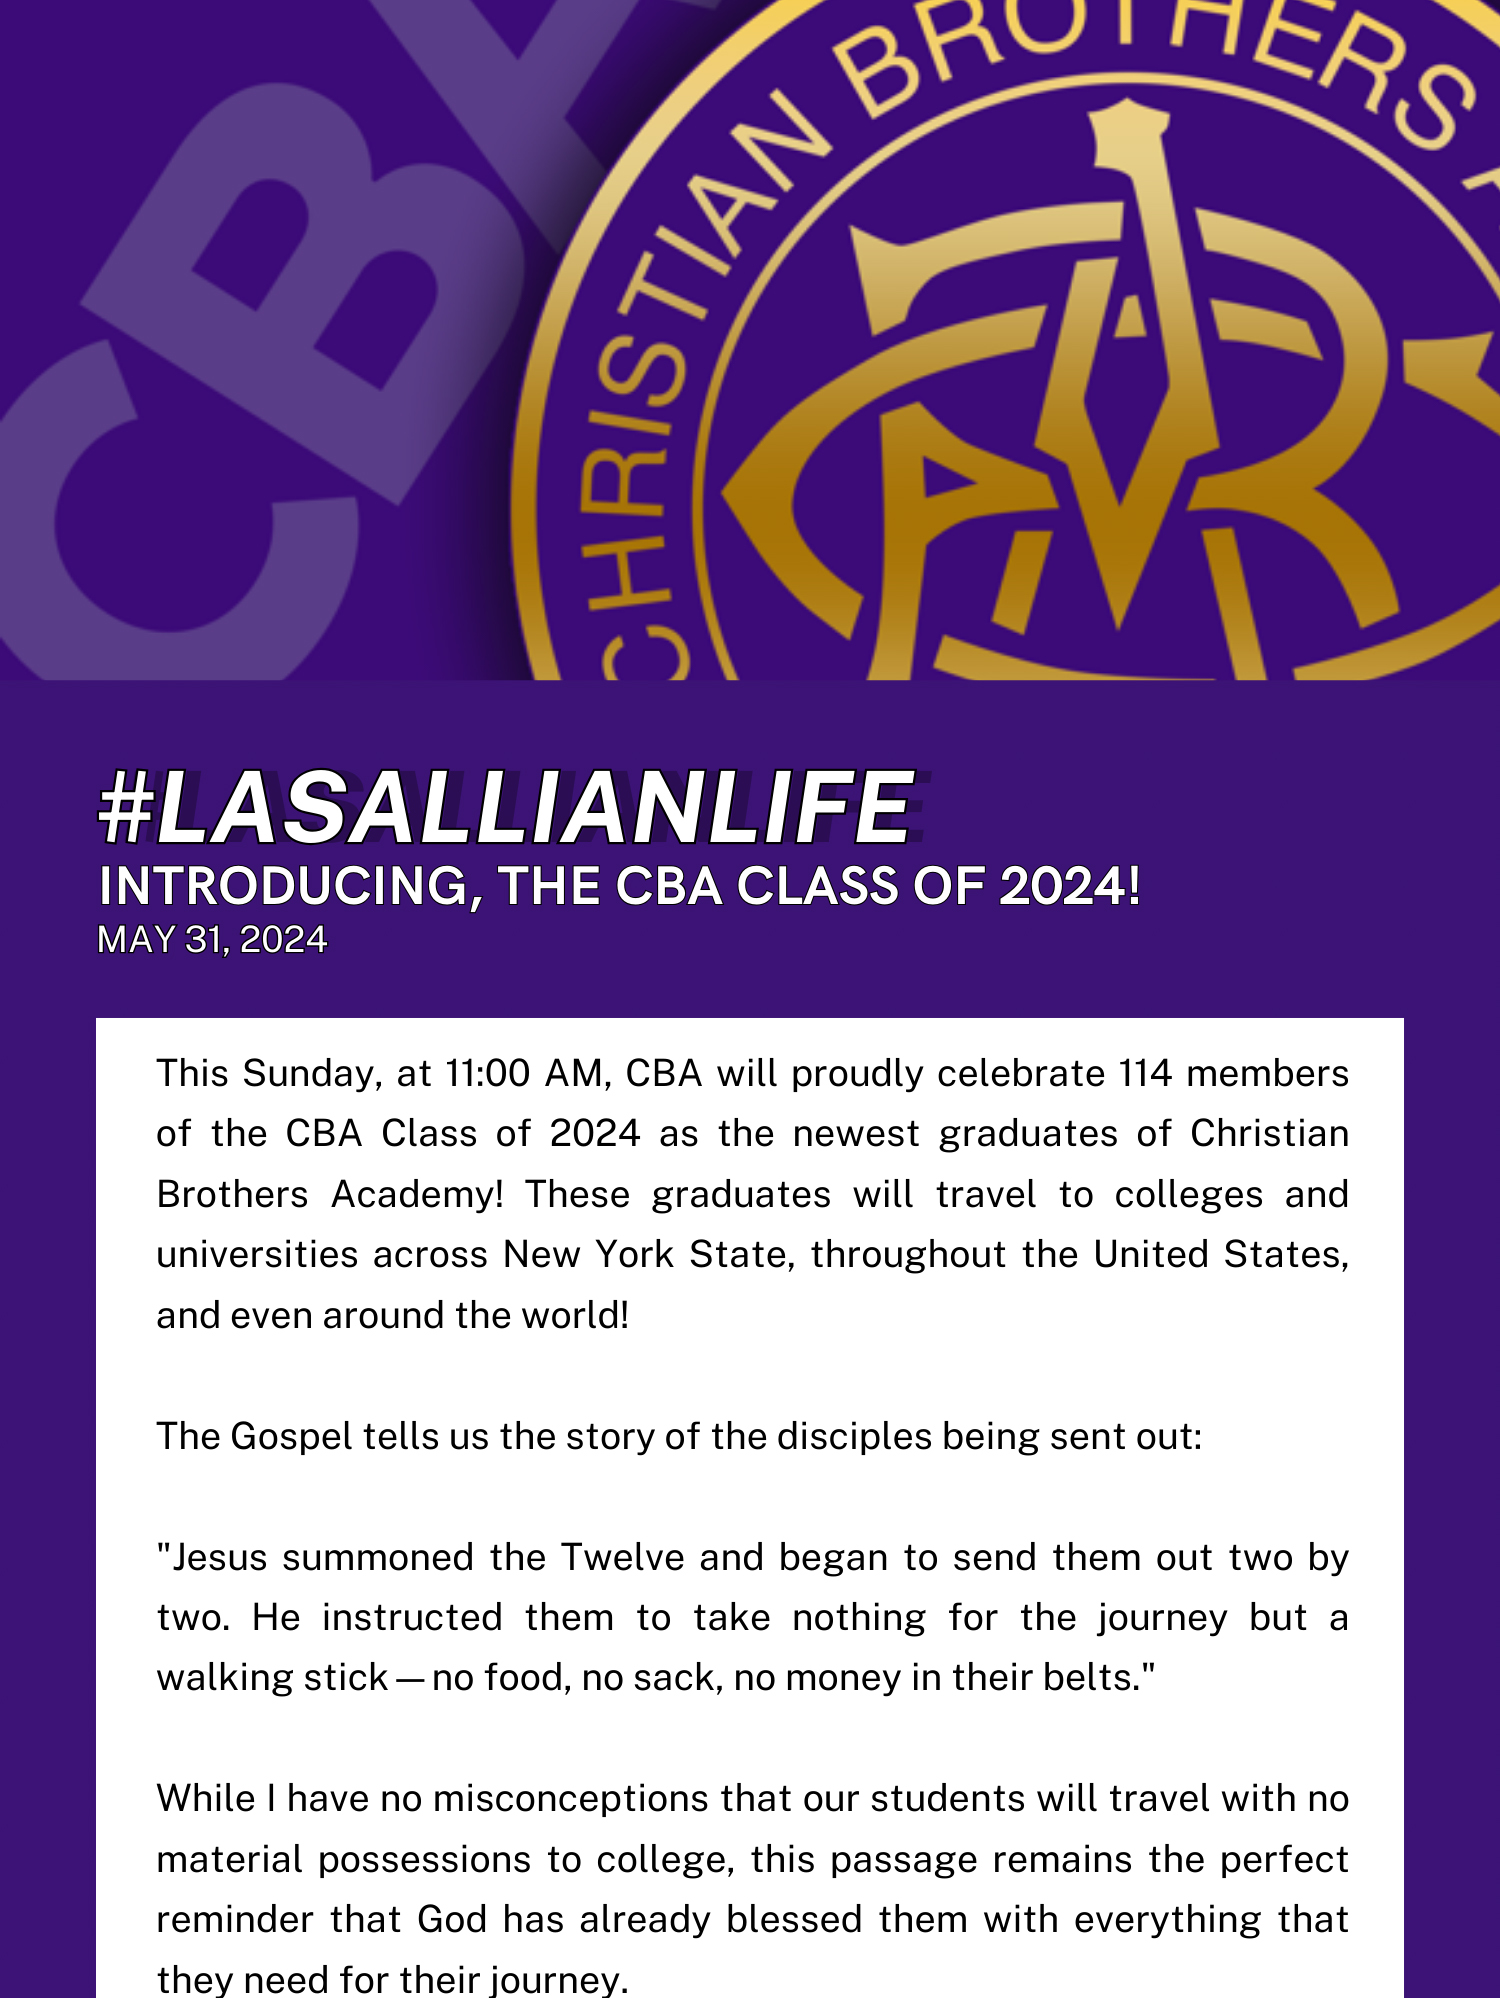 #LasallianLife : Introducing, the CBA Class of 2024!